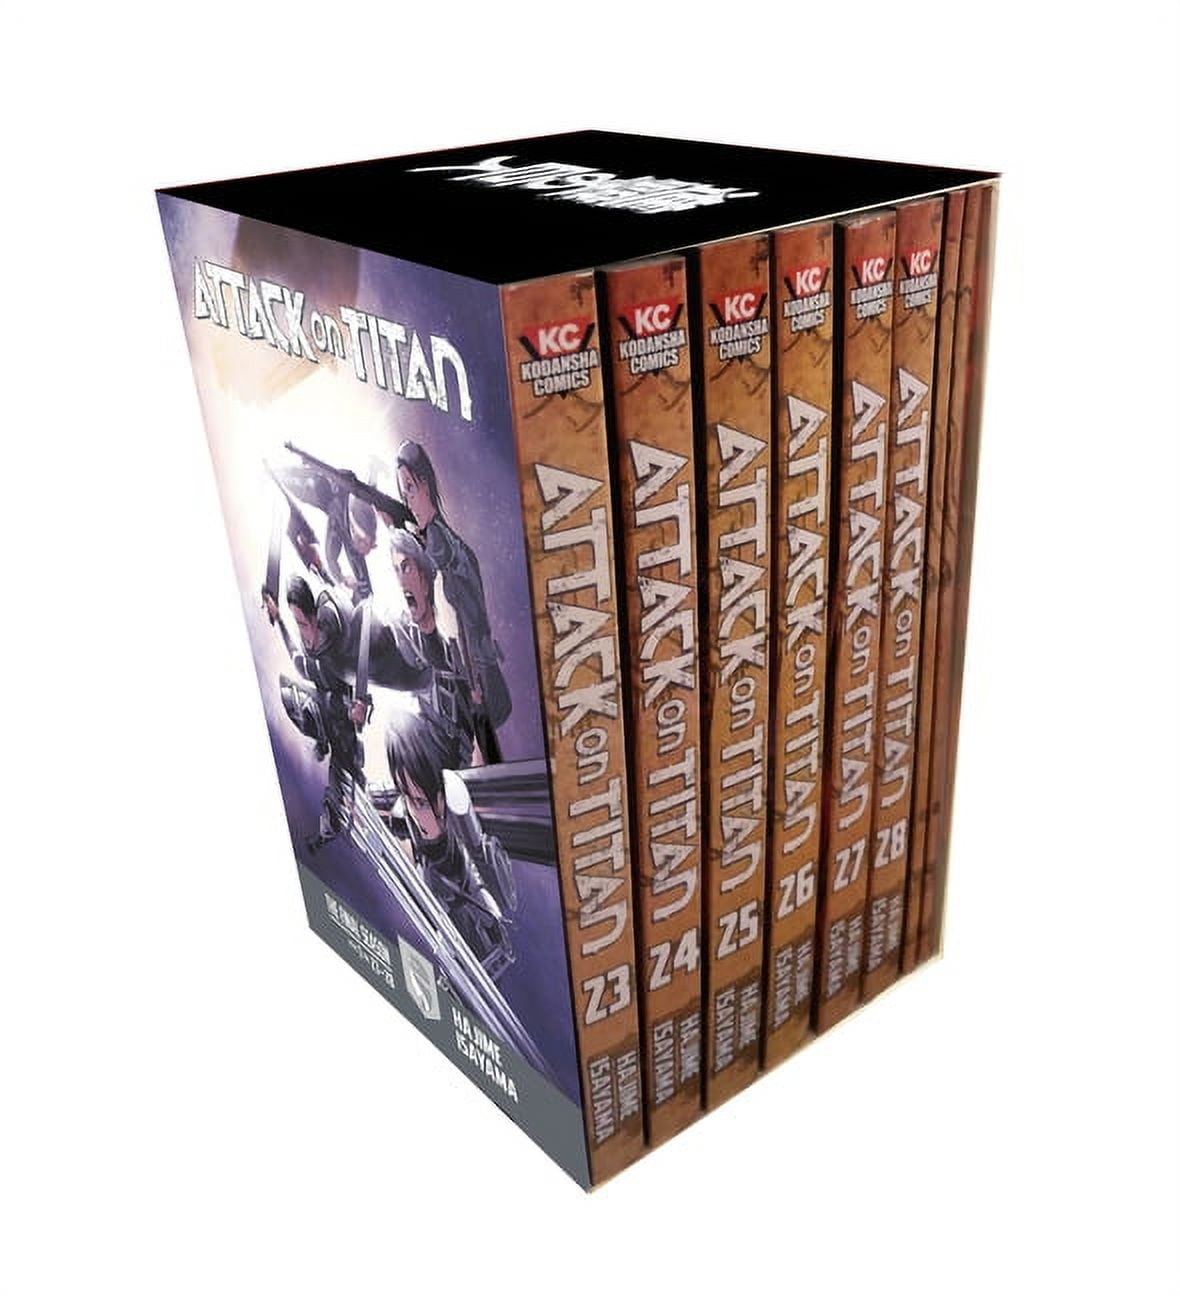 Attack on Titan Manga Box Sets: Attack on Titan The Final Season Part 1 Manga  Box Set (Series #6) (Paperback) 